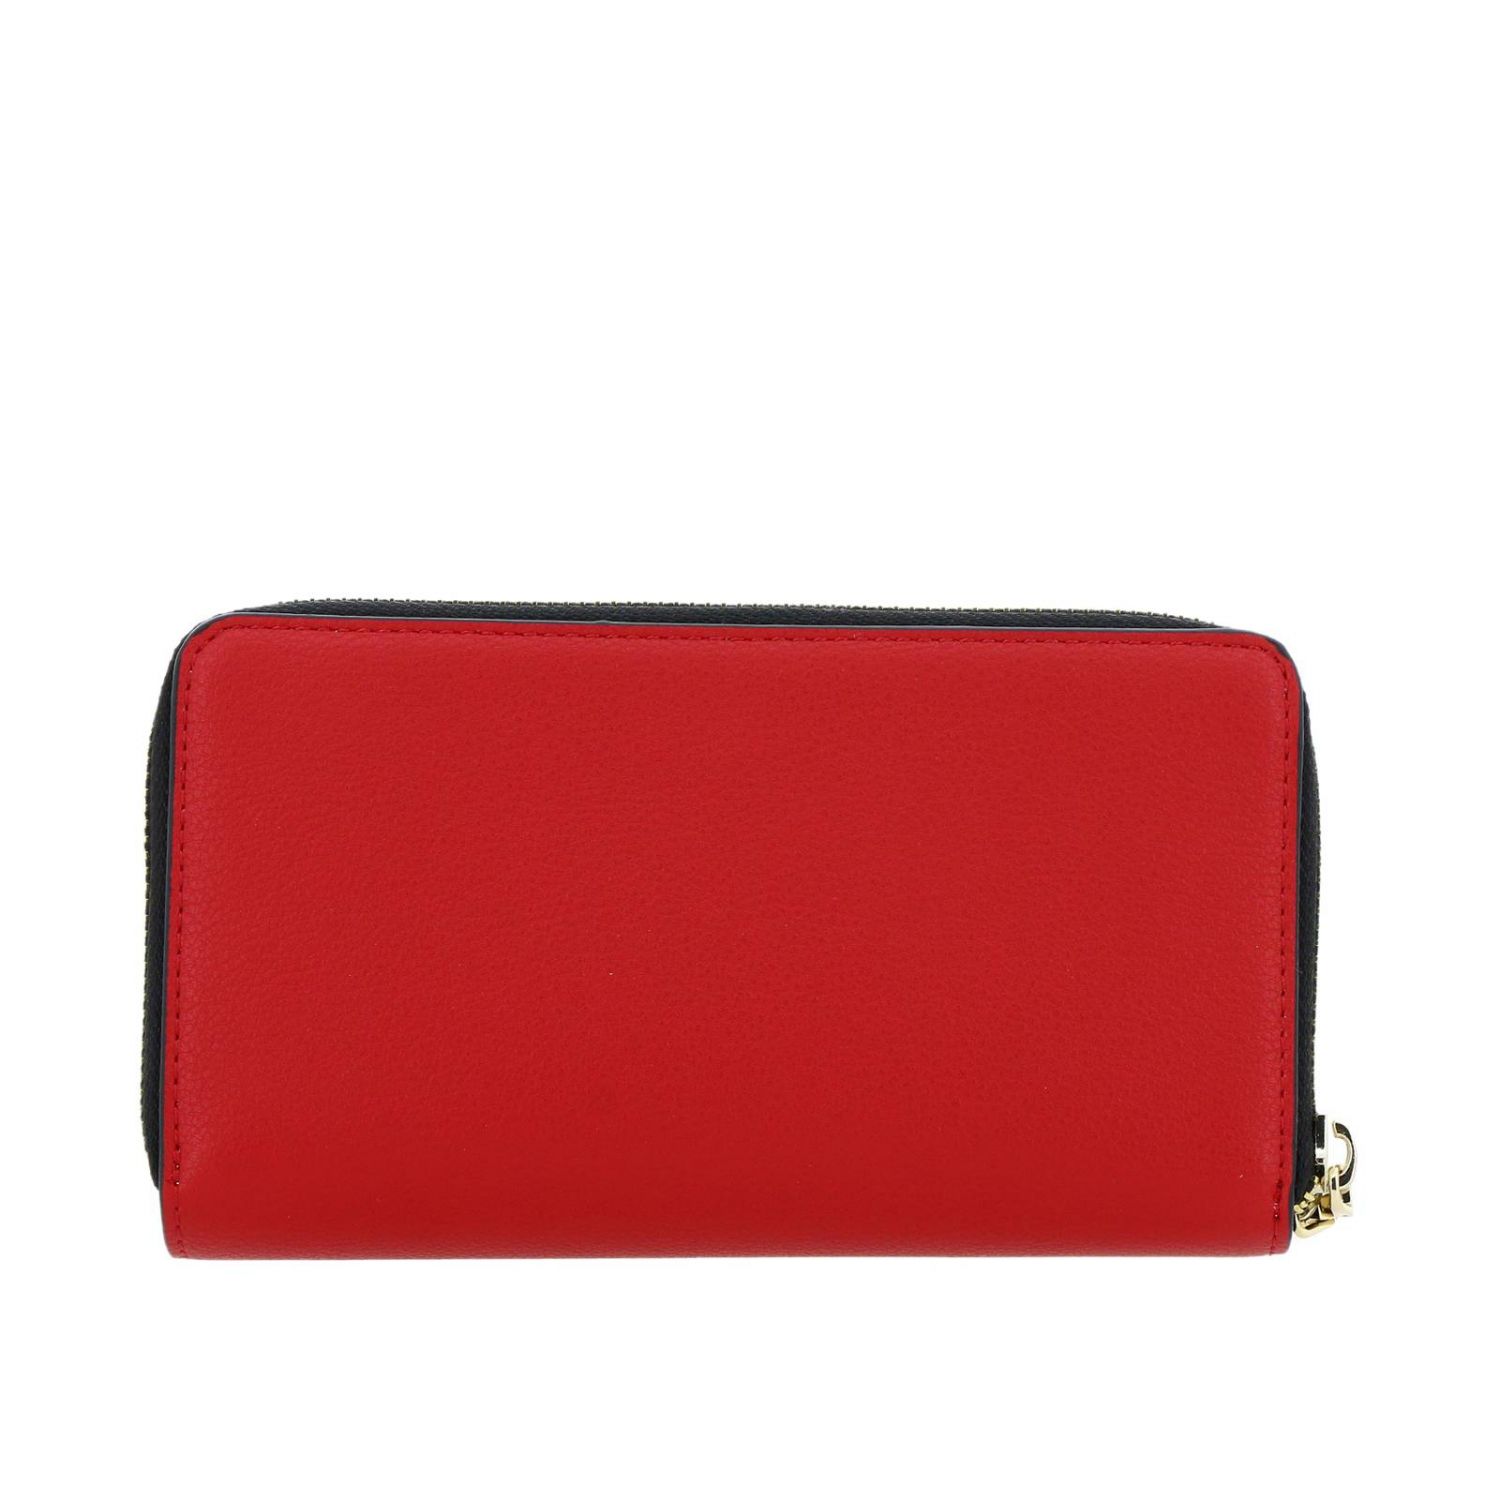 Calvin Klein Outlet: Wallet women - Red | Wallet Calvin Klein ...